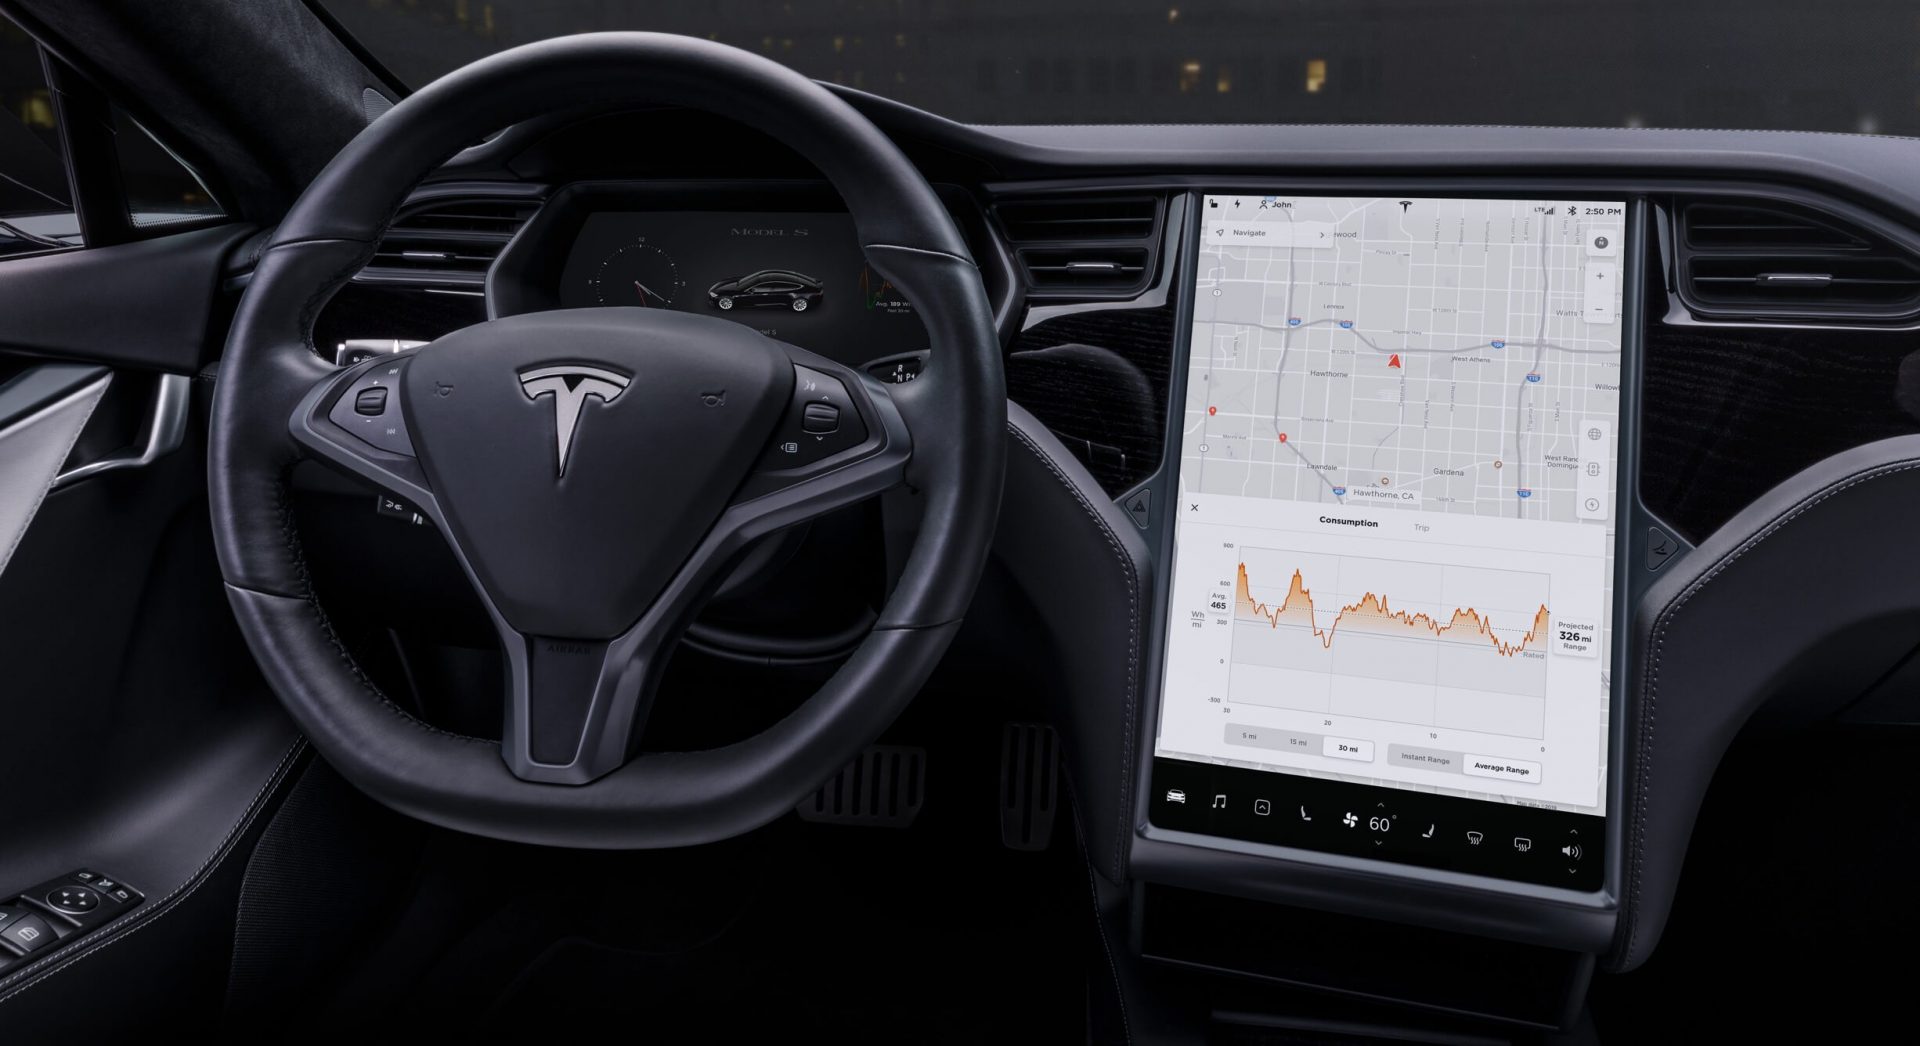 Tesla model s touchscreen